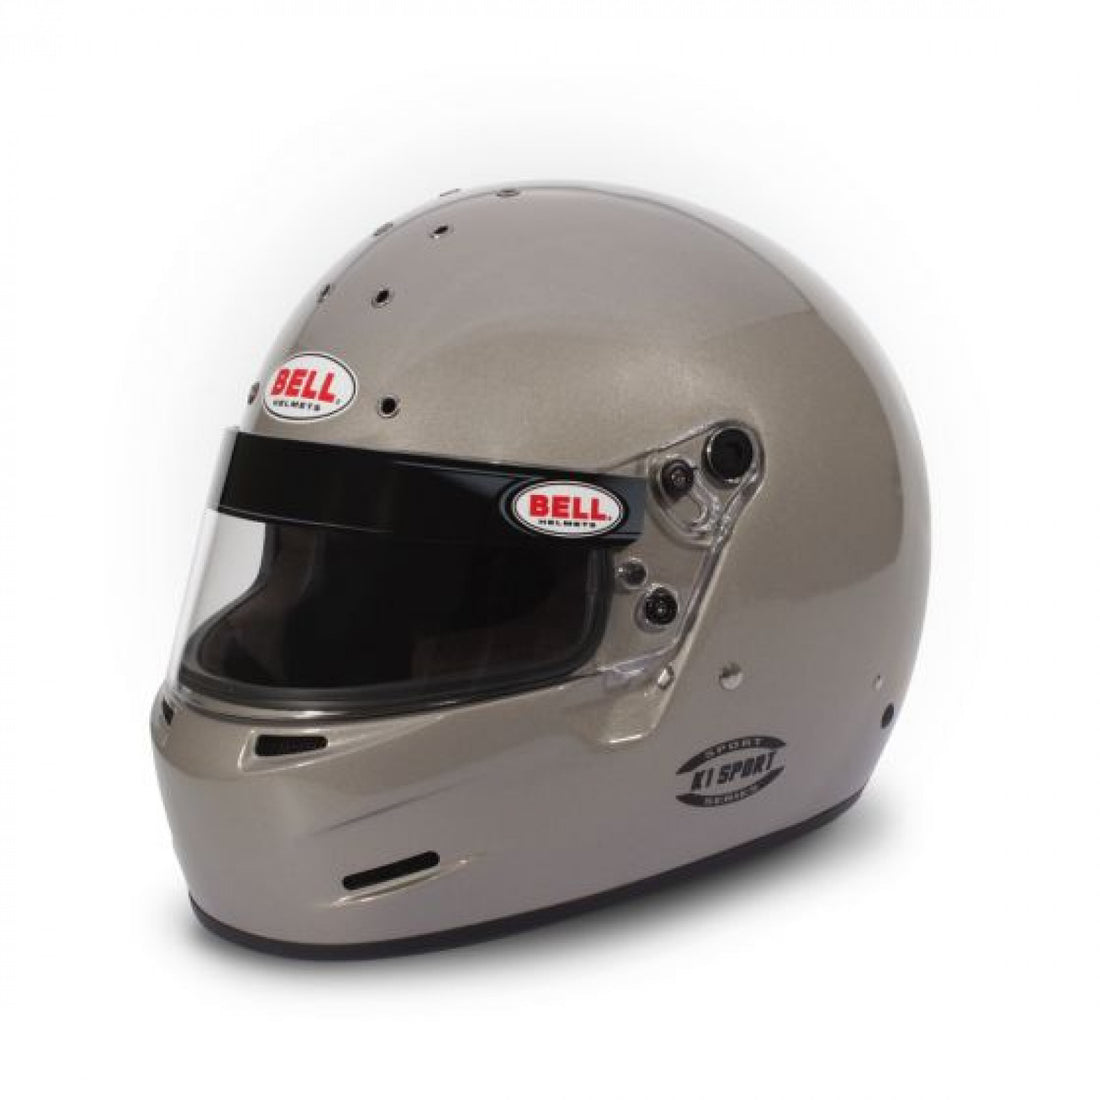 Bell K1 Sport Titanium Helmet Large (60)